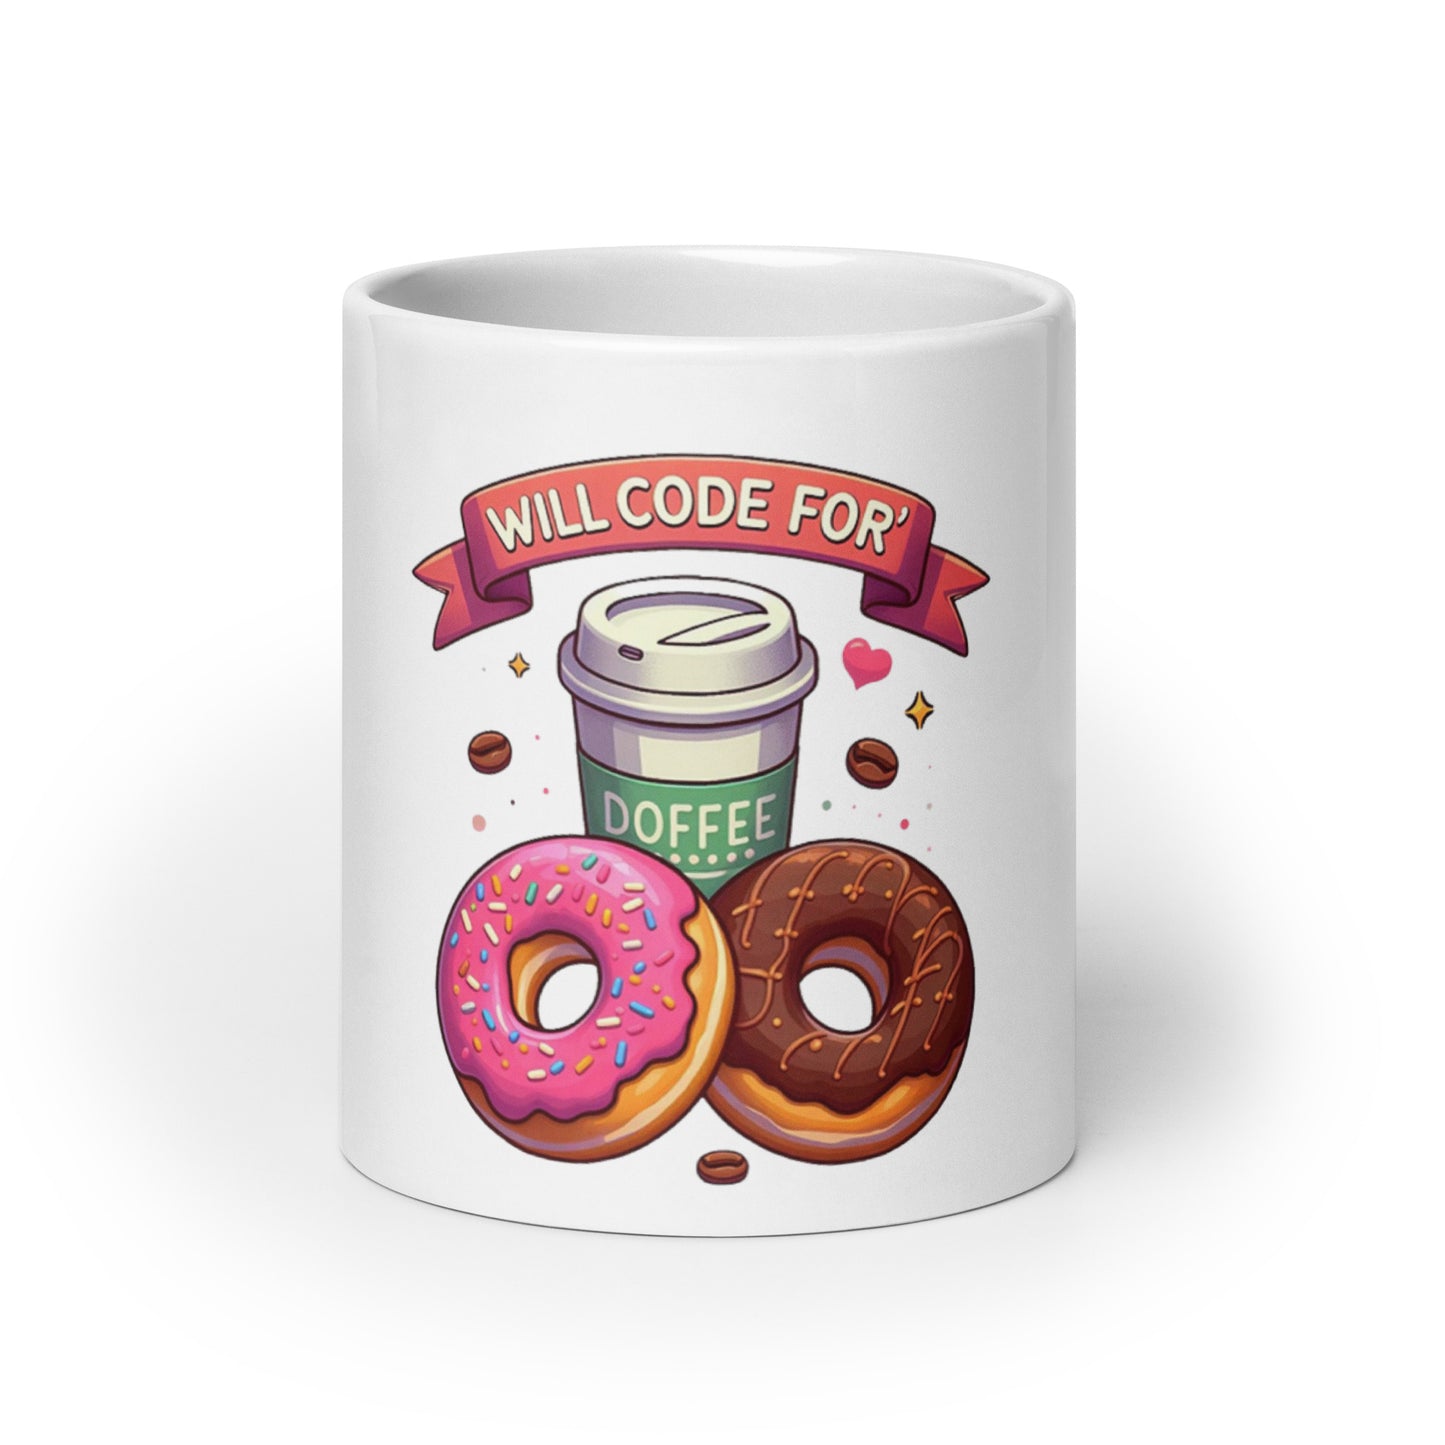 Code for Coffee mug